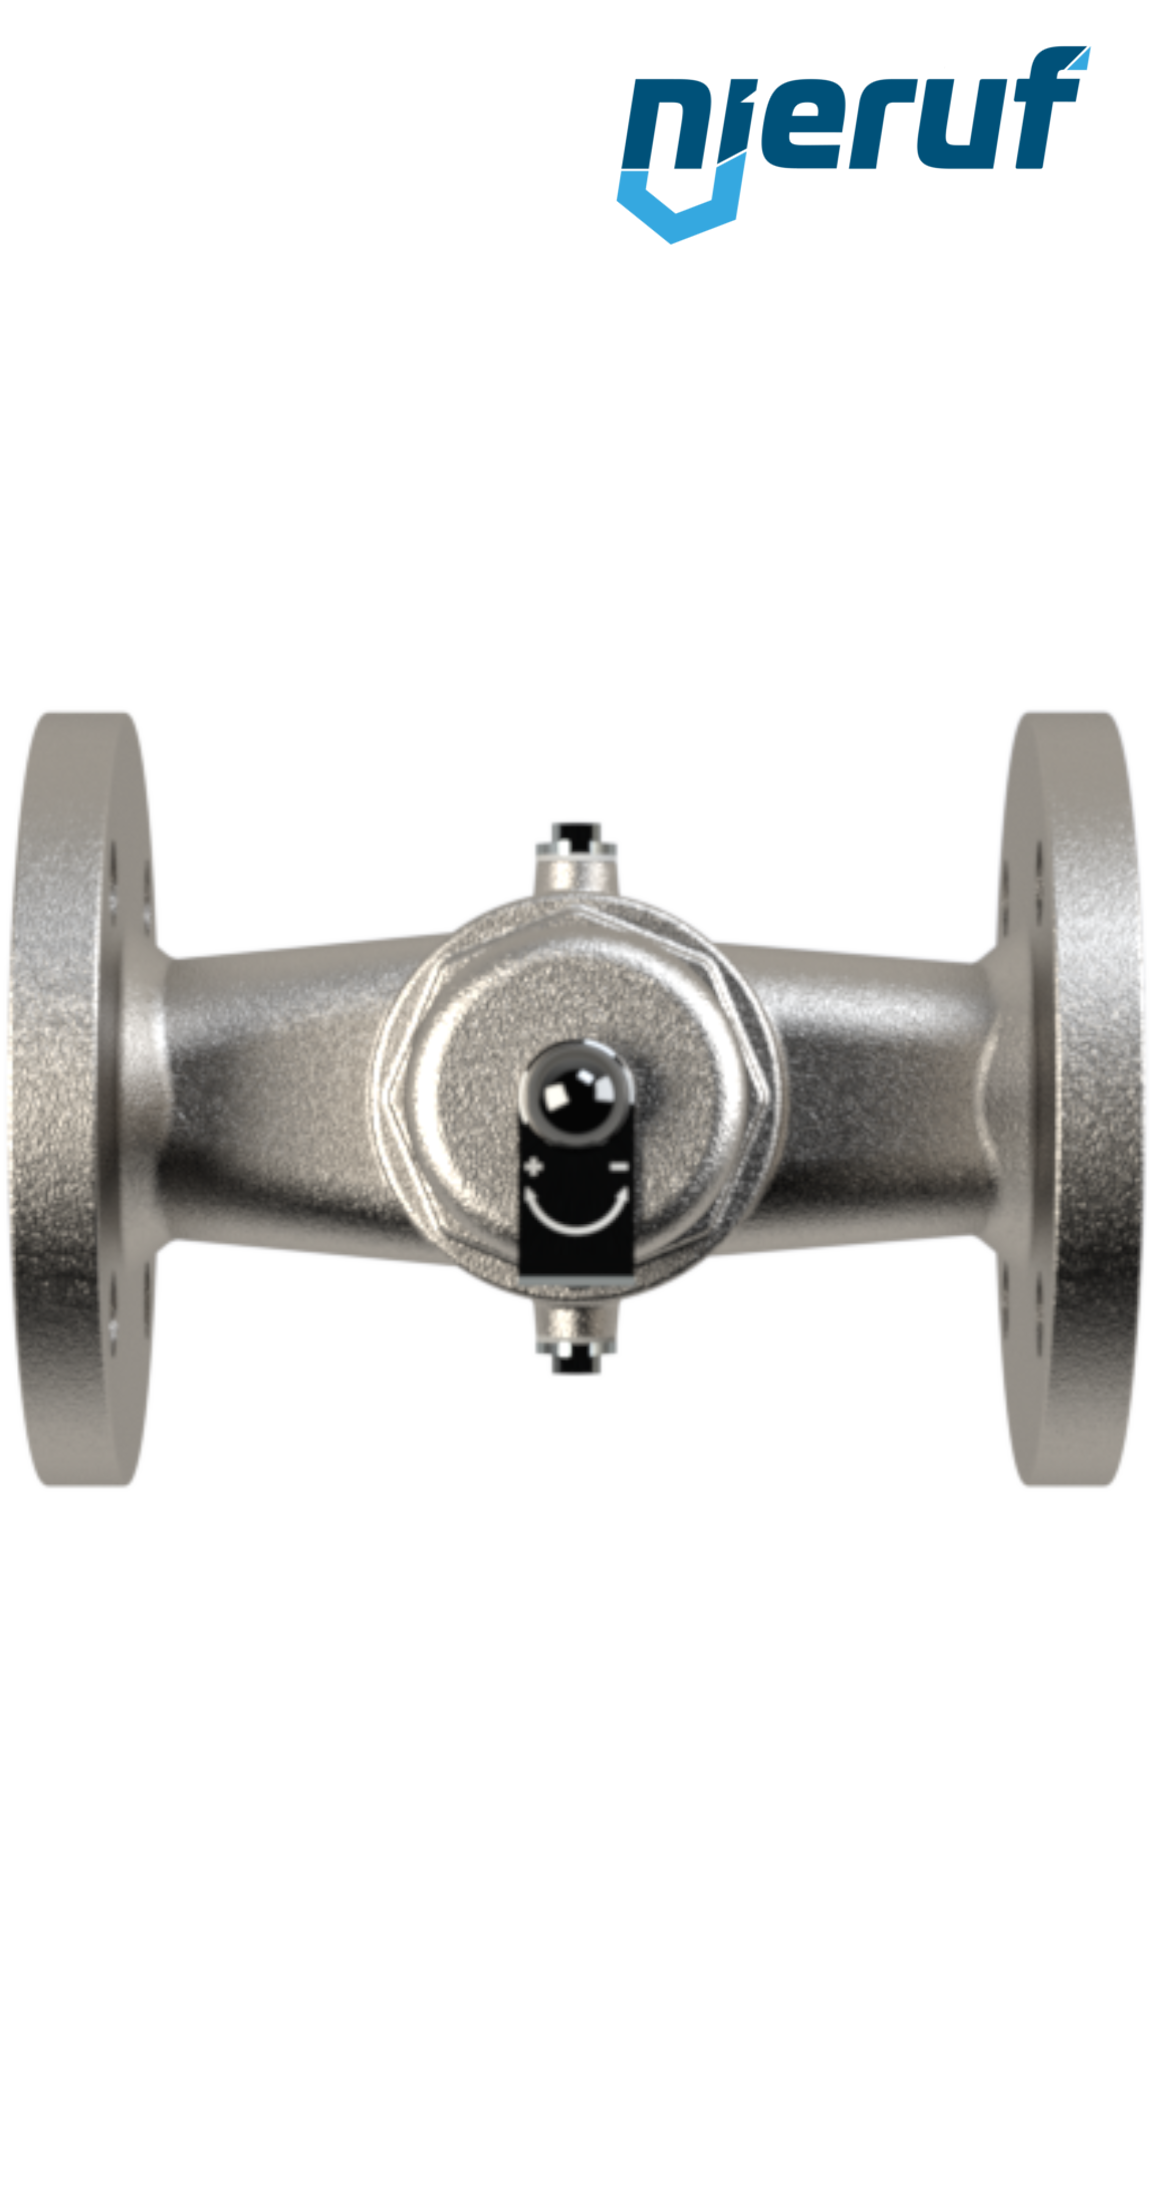 Flange-pressure reducing valve DN 25 PN40 DM08 stainless steel FKM 5.0 - 15.0 bar